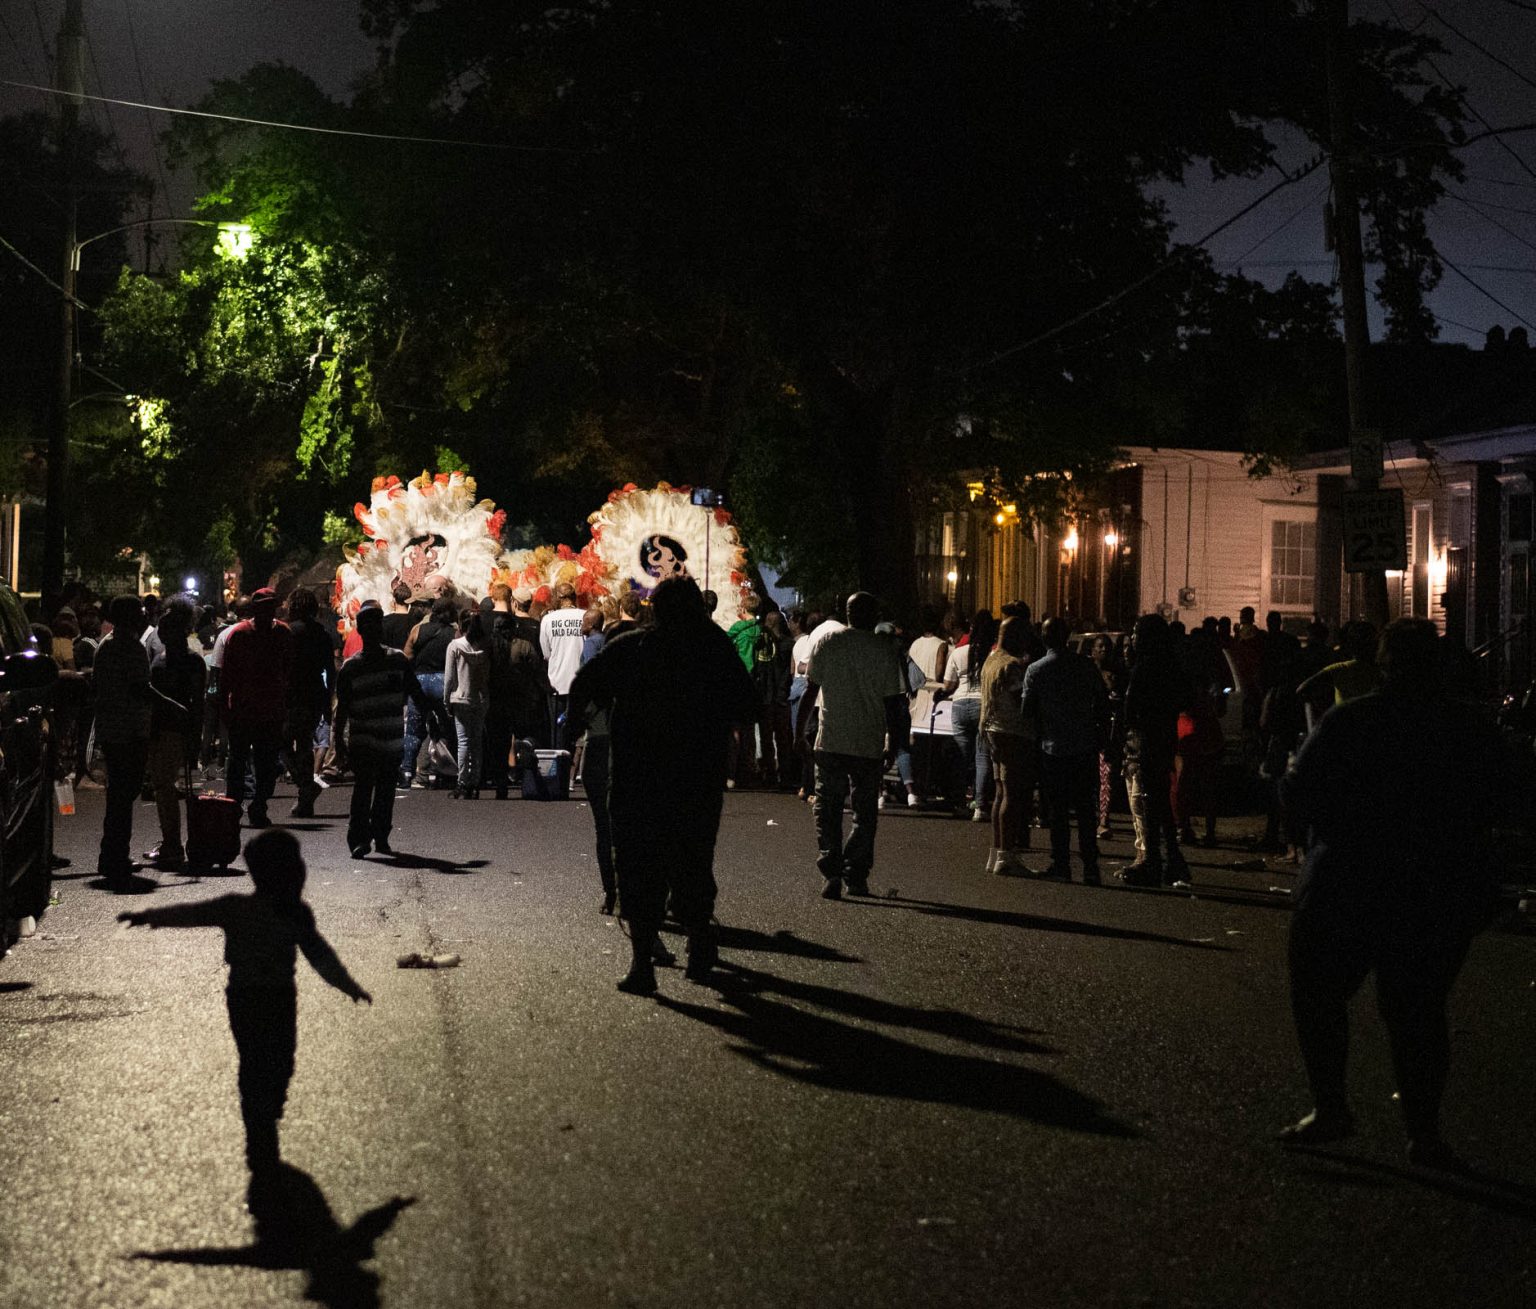 Mardi Gras Indians, New Orleasn, St. Joseph night